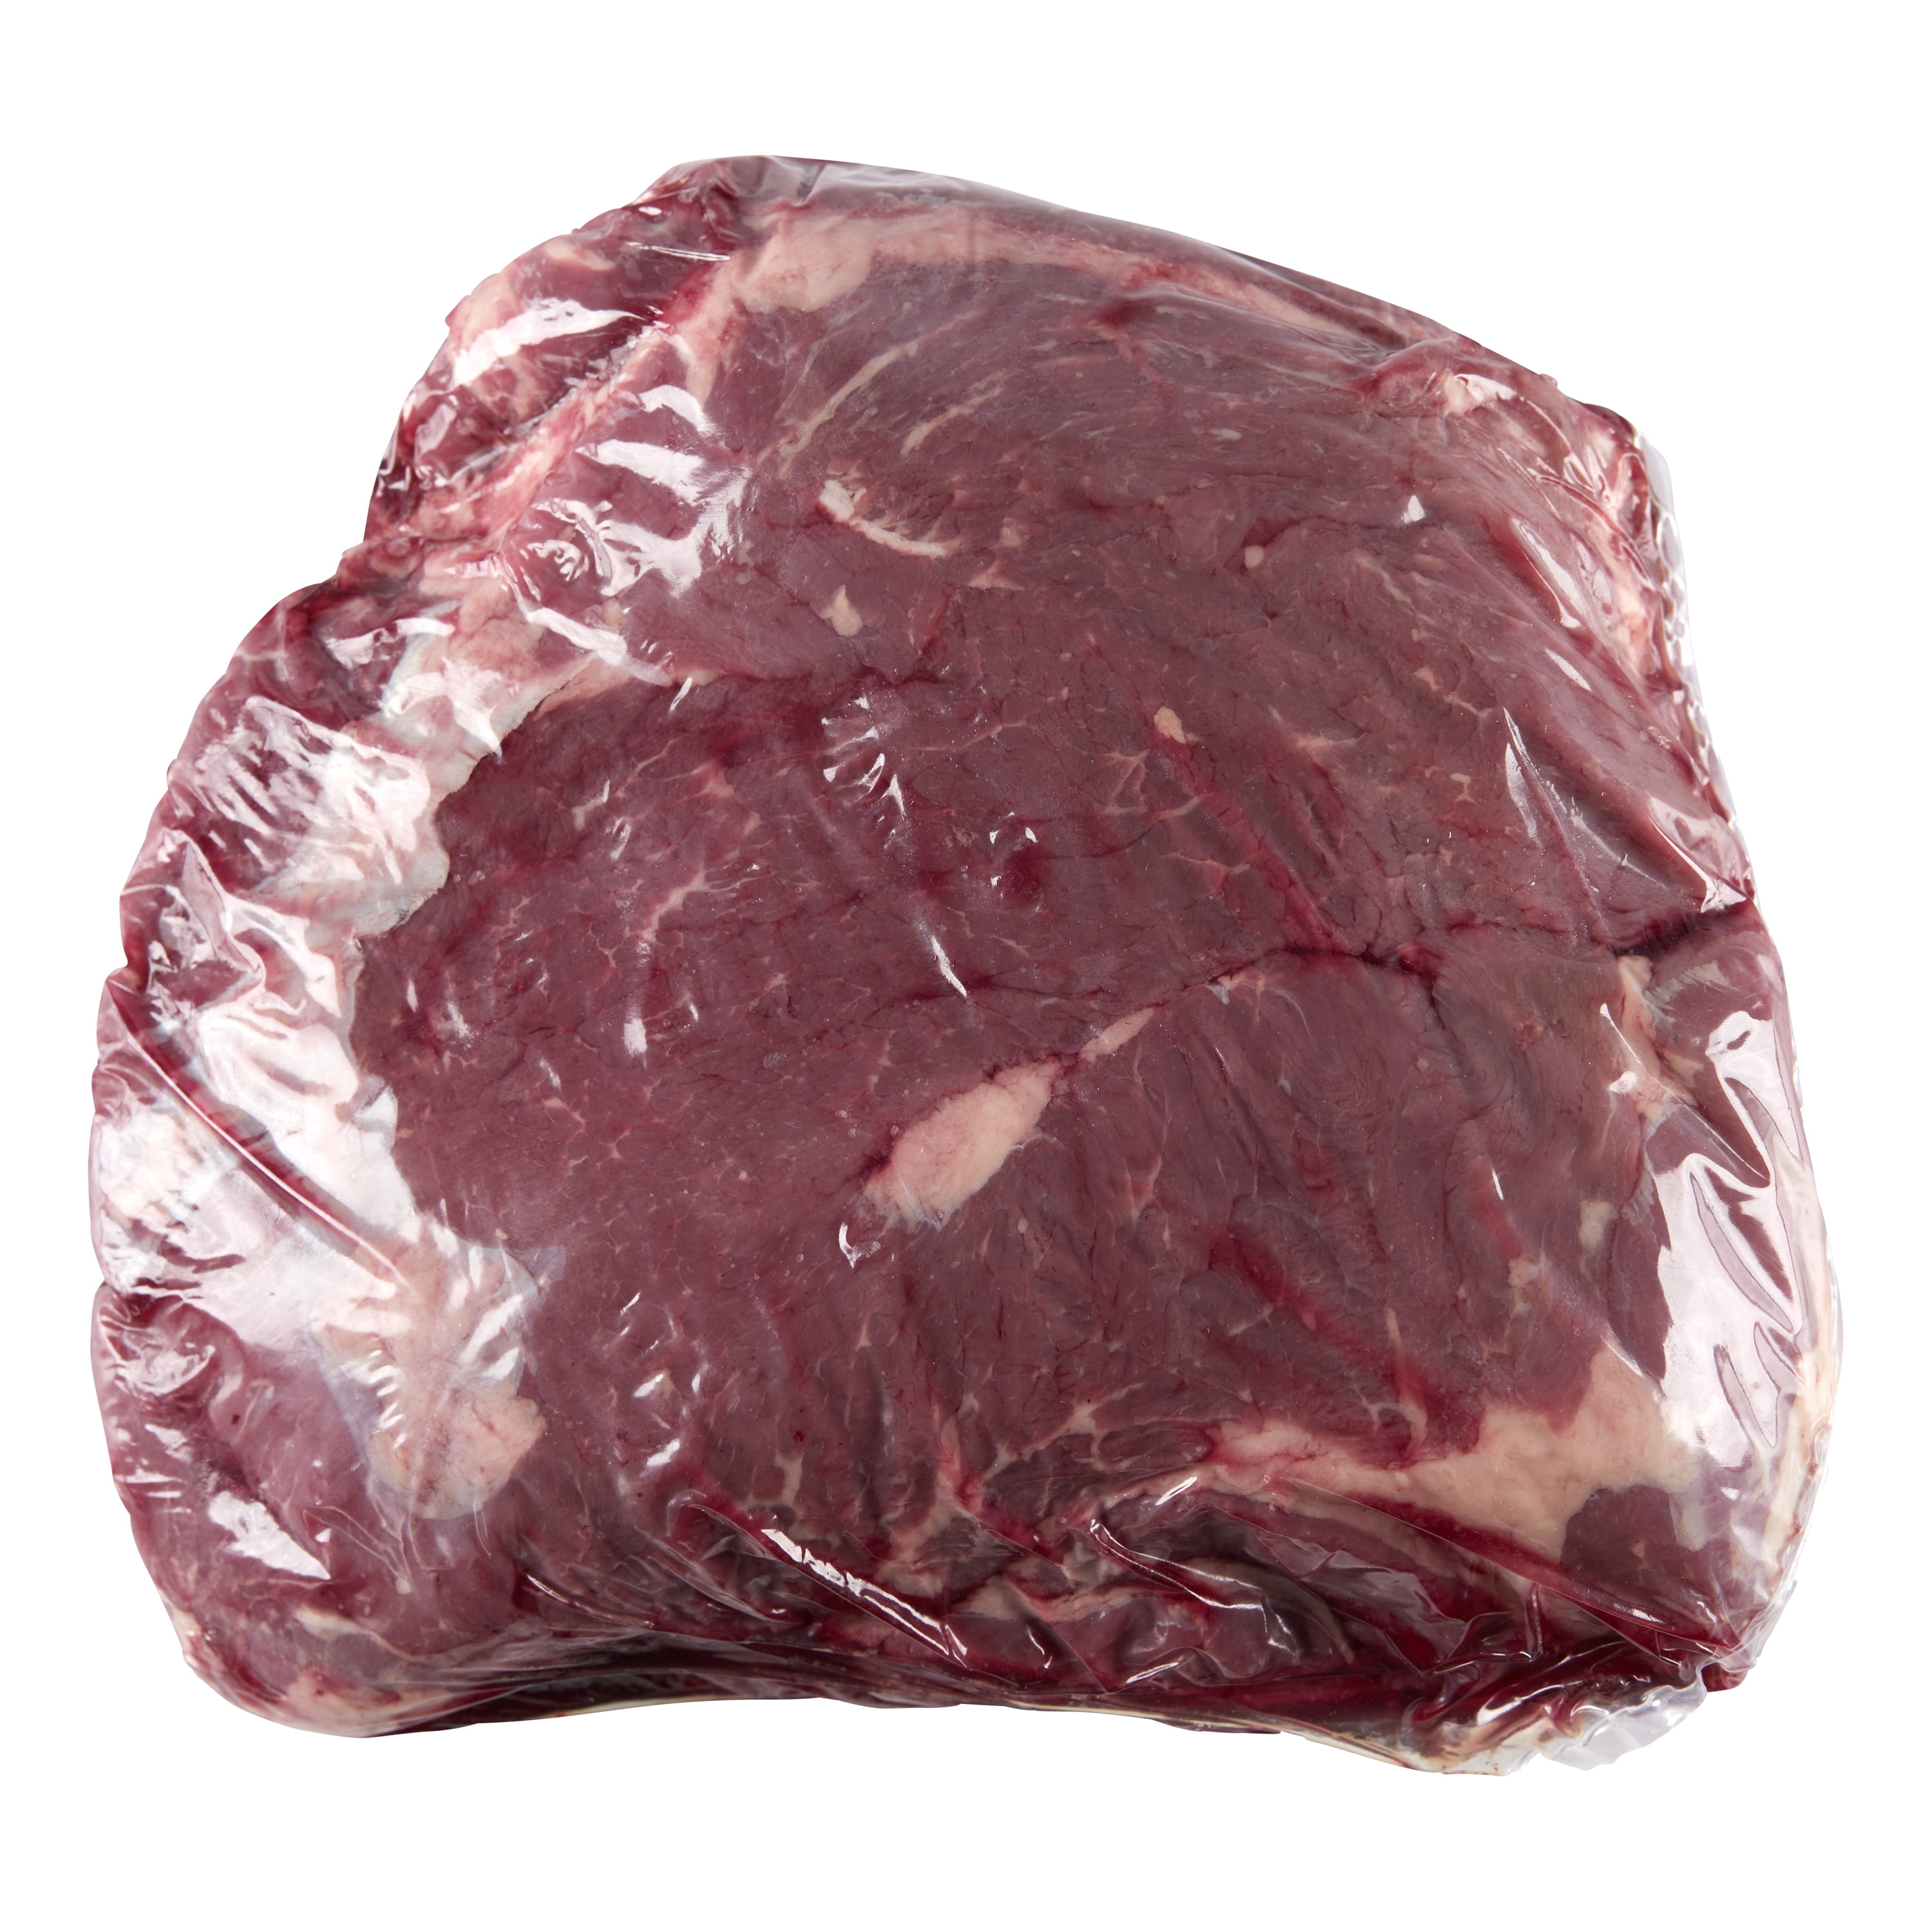 Beef Chuck Roll, 8.17 10.0 lb